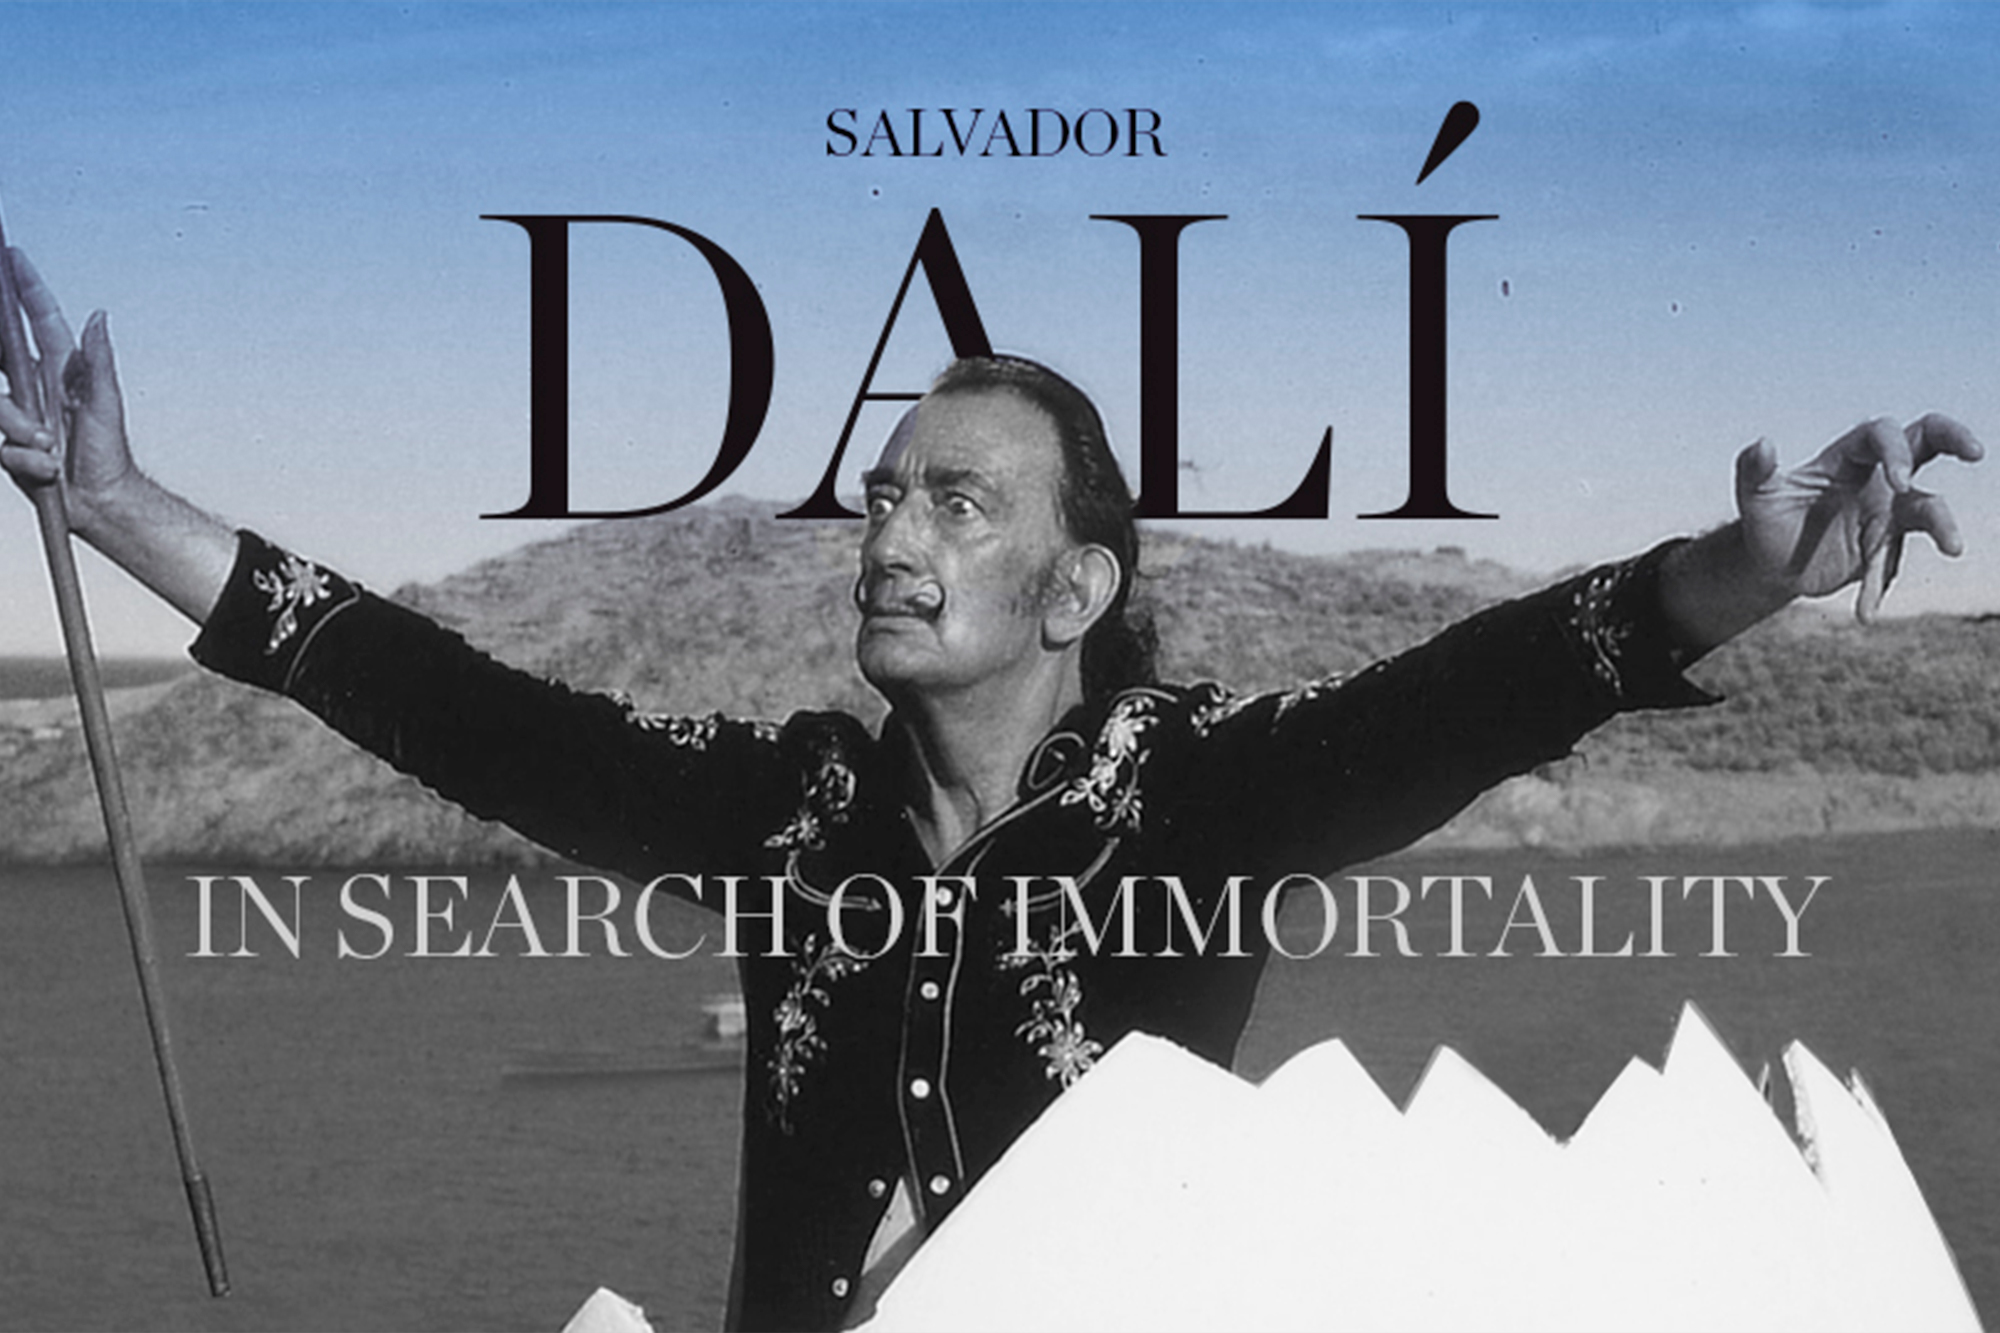 Salvador Dalí English version